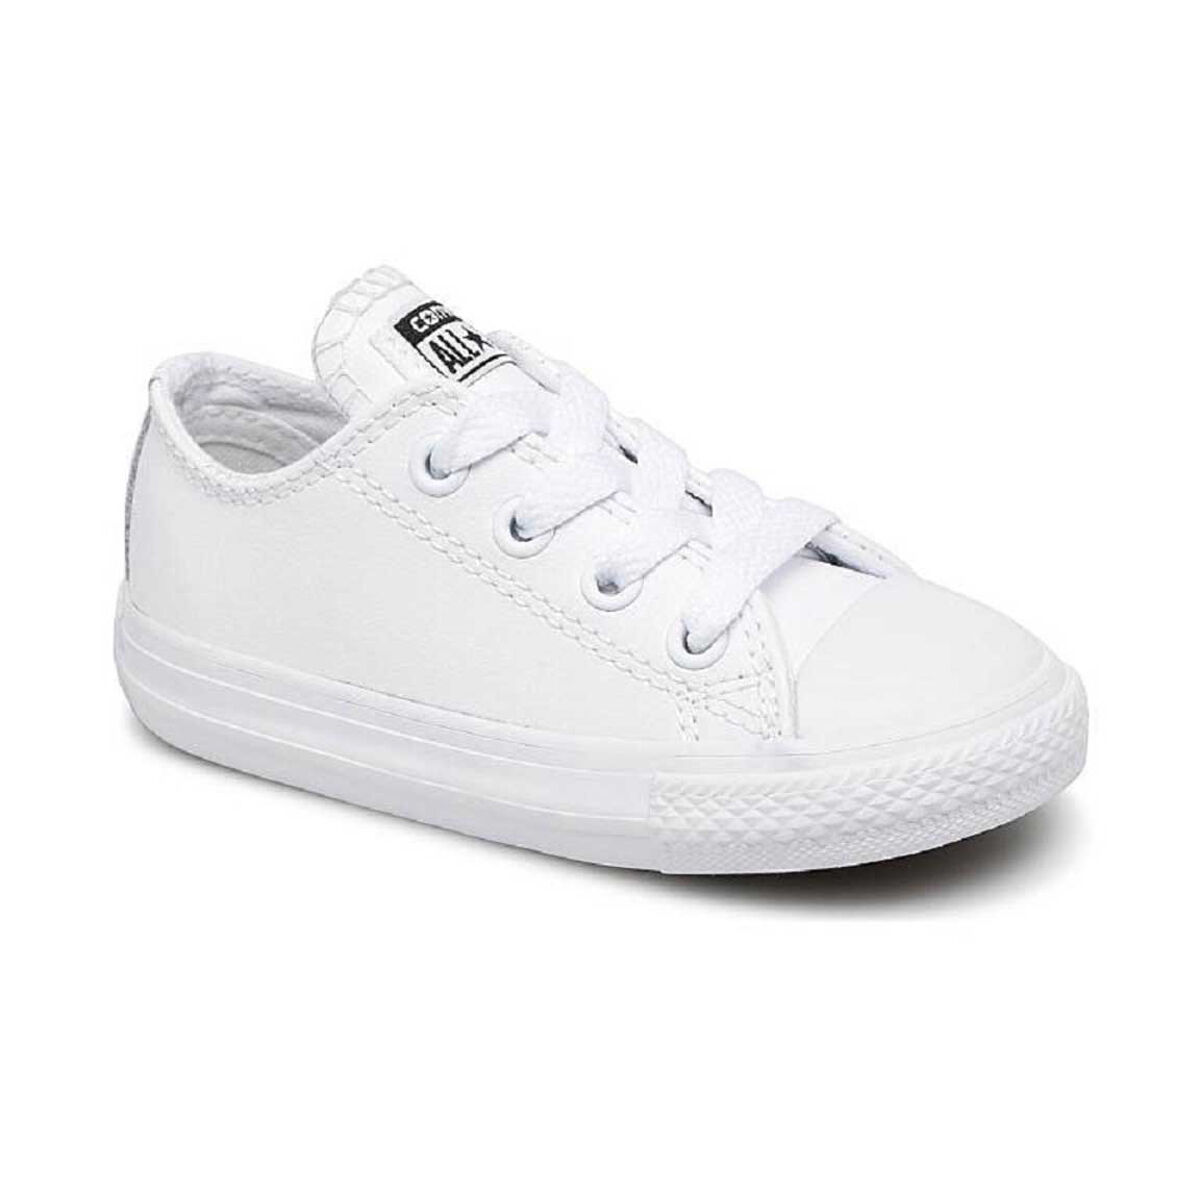 white sox converse shoes